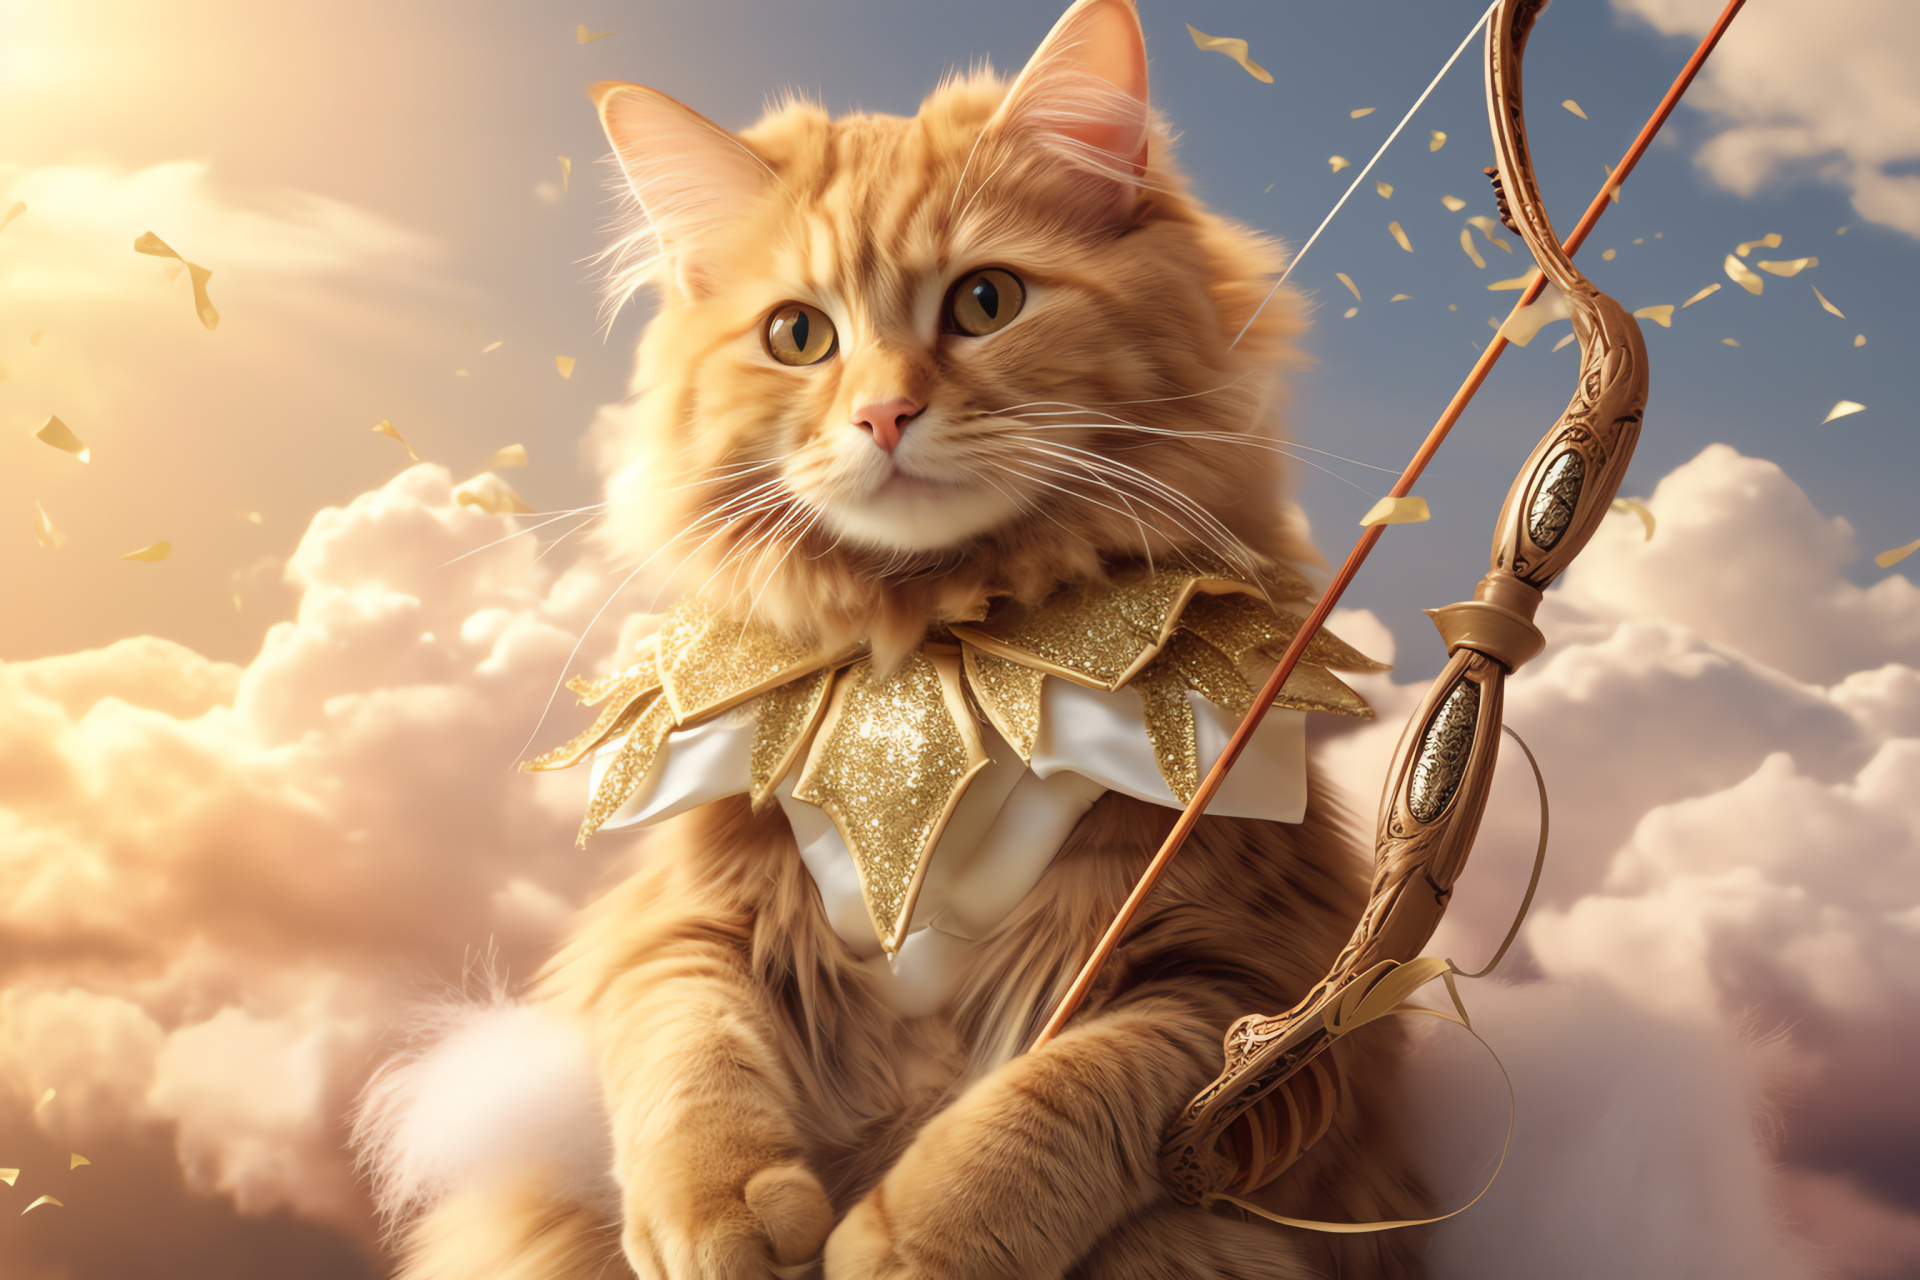 Amorous cupid cat pose, feline love archer, shimmering archery gear, romantic holiday symbol, mythical Valentine's mascot, HD Desktop Image